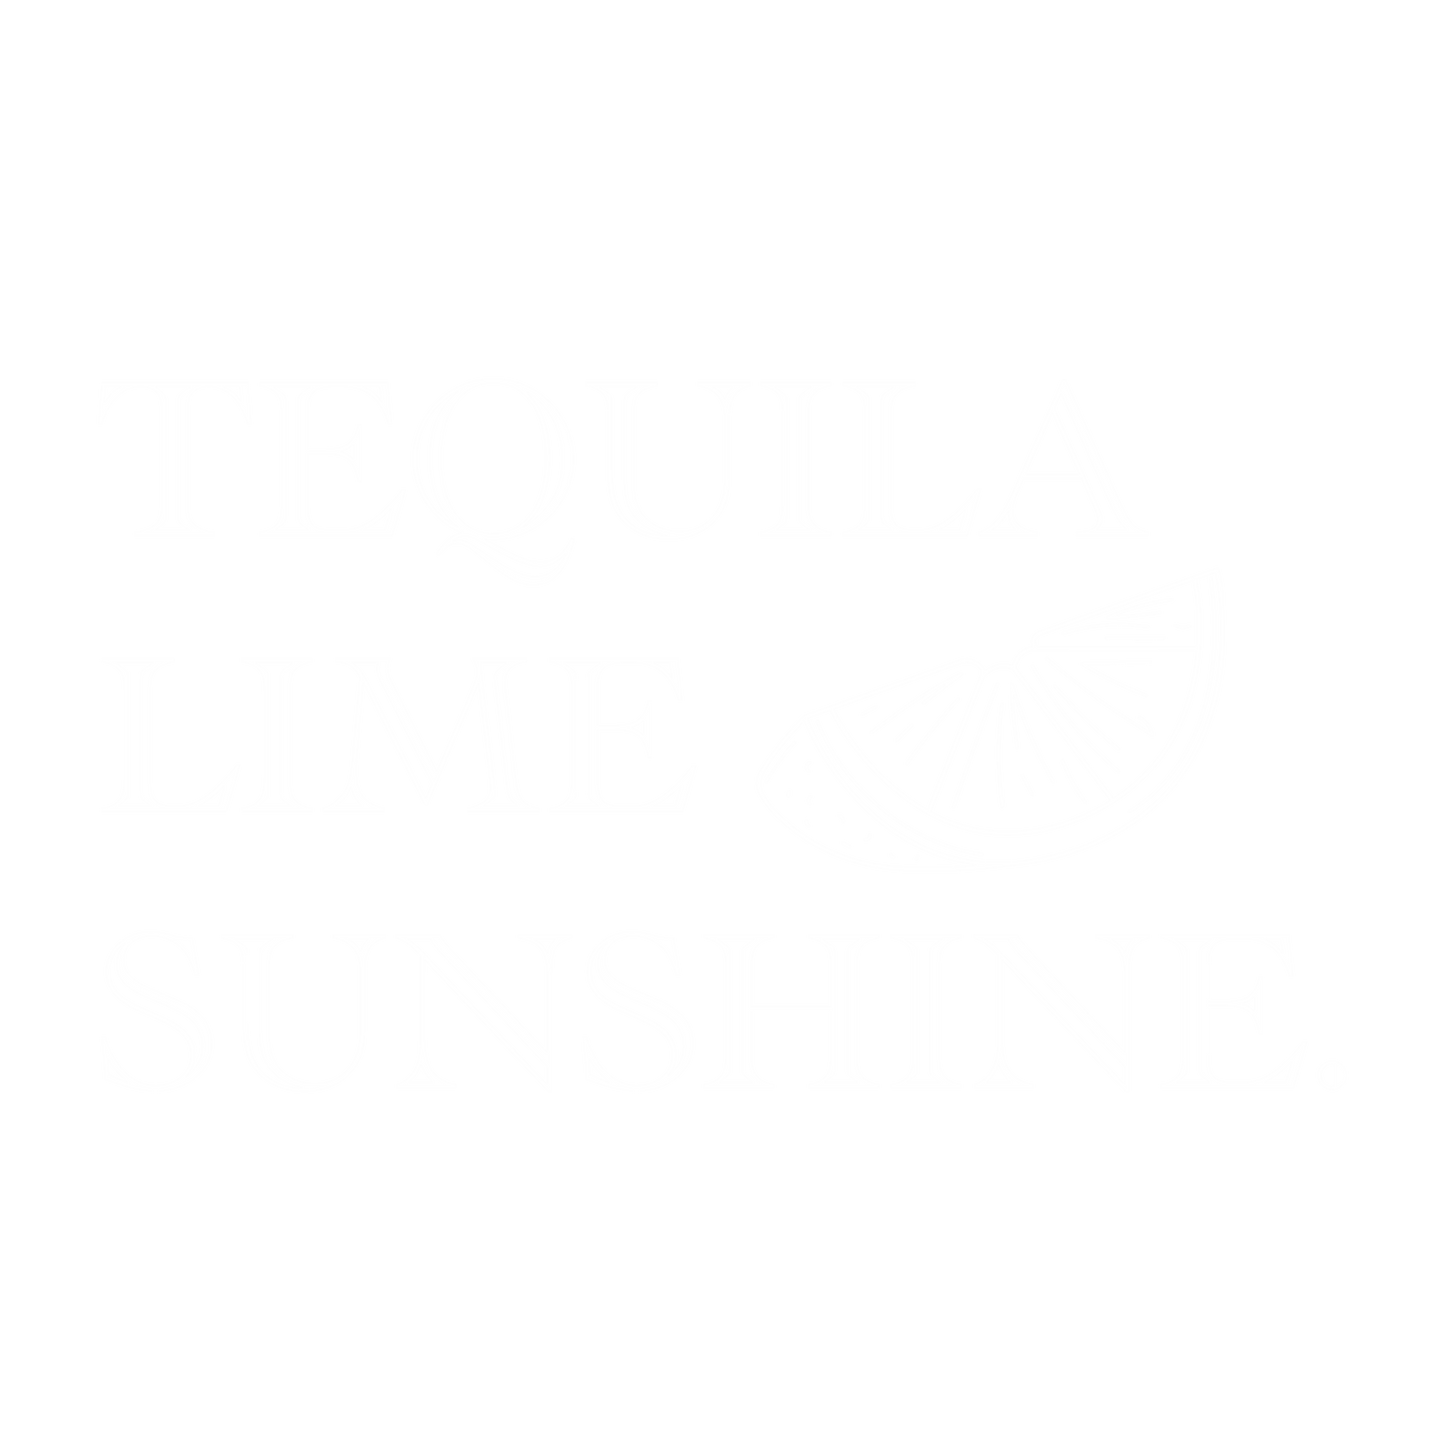 Tequila Lime Sunshine.